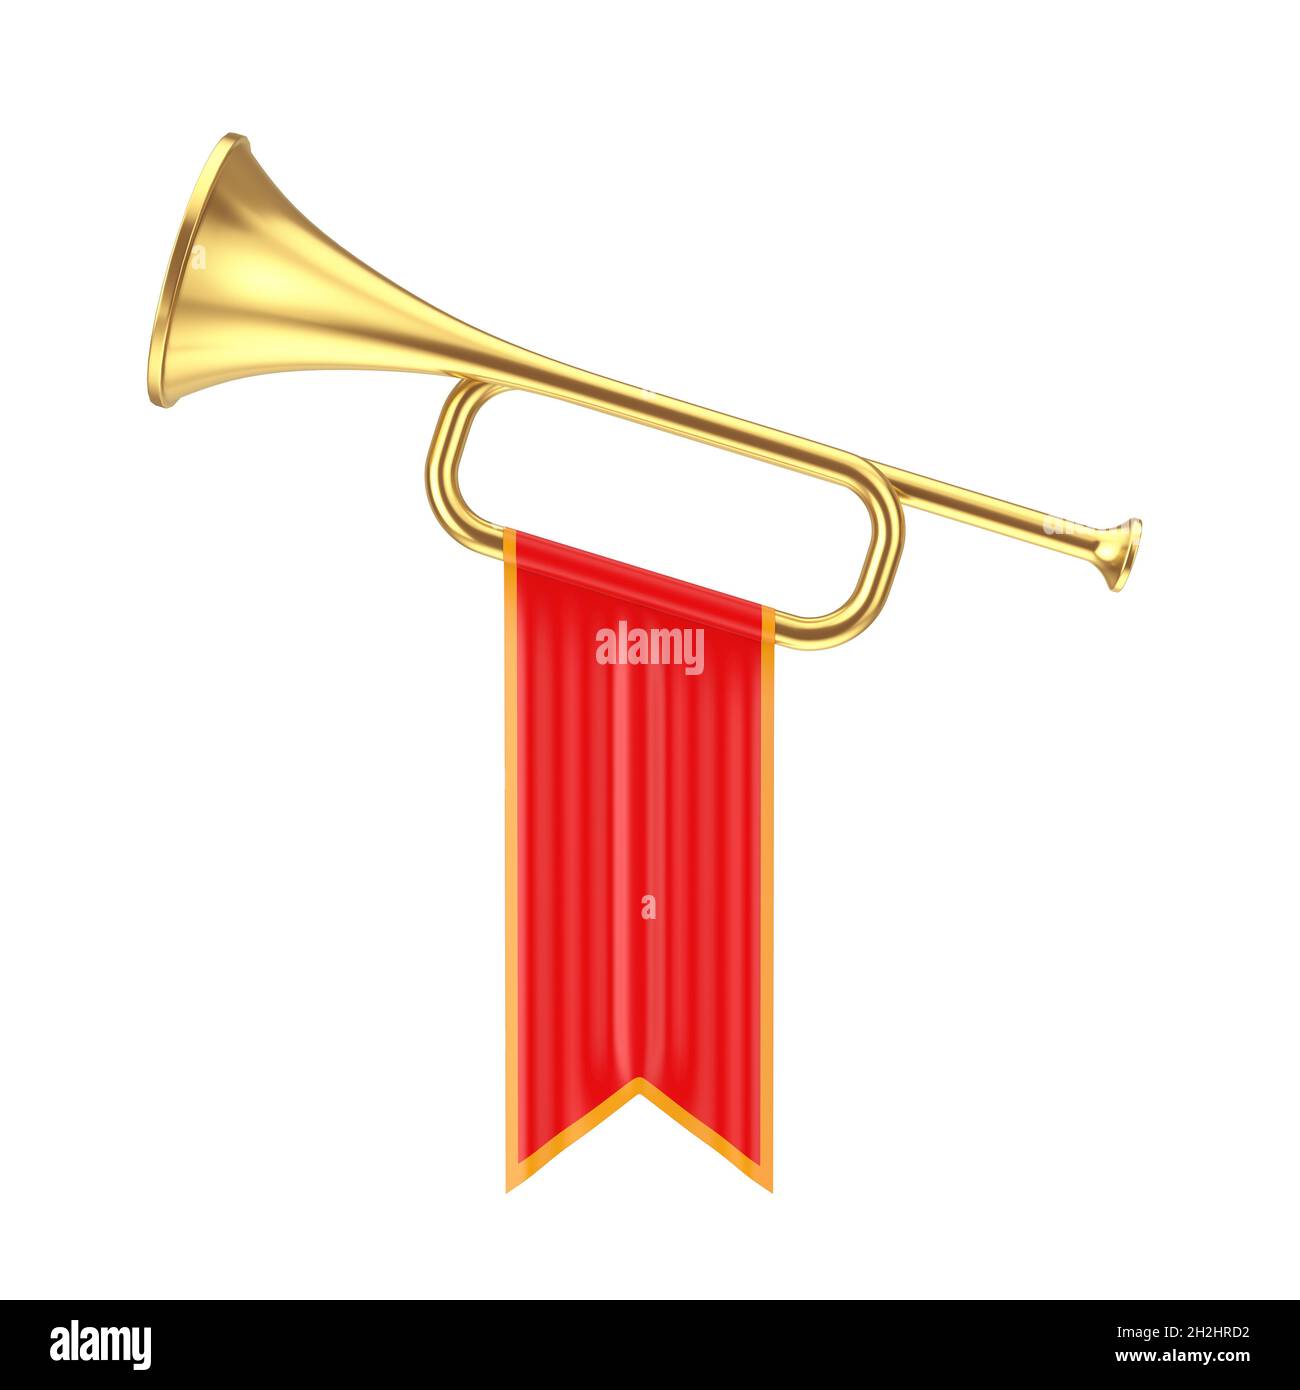 Fanfare trumpet Cut Out Stock Images & Pictures - Alamy